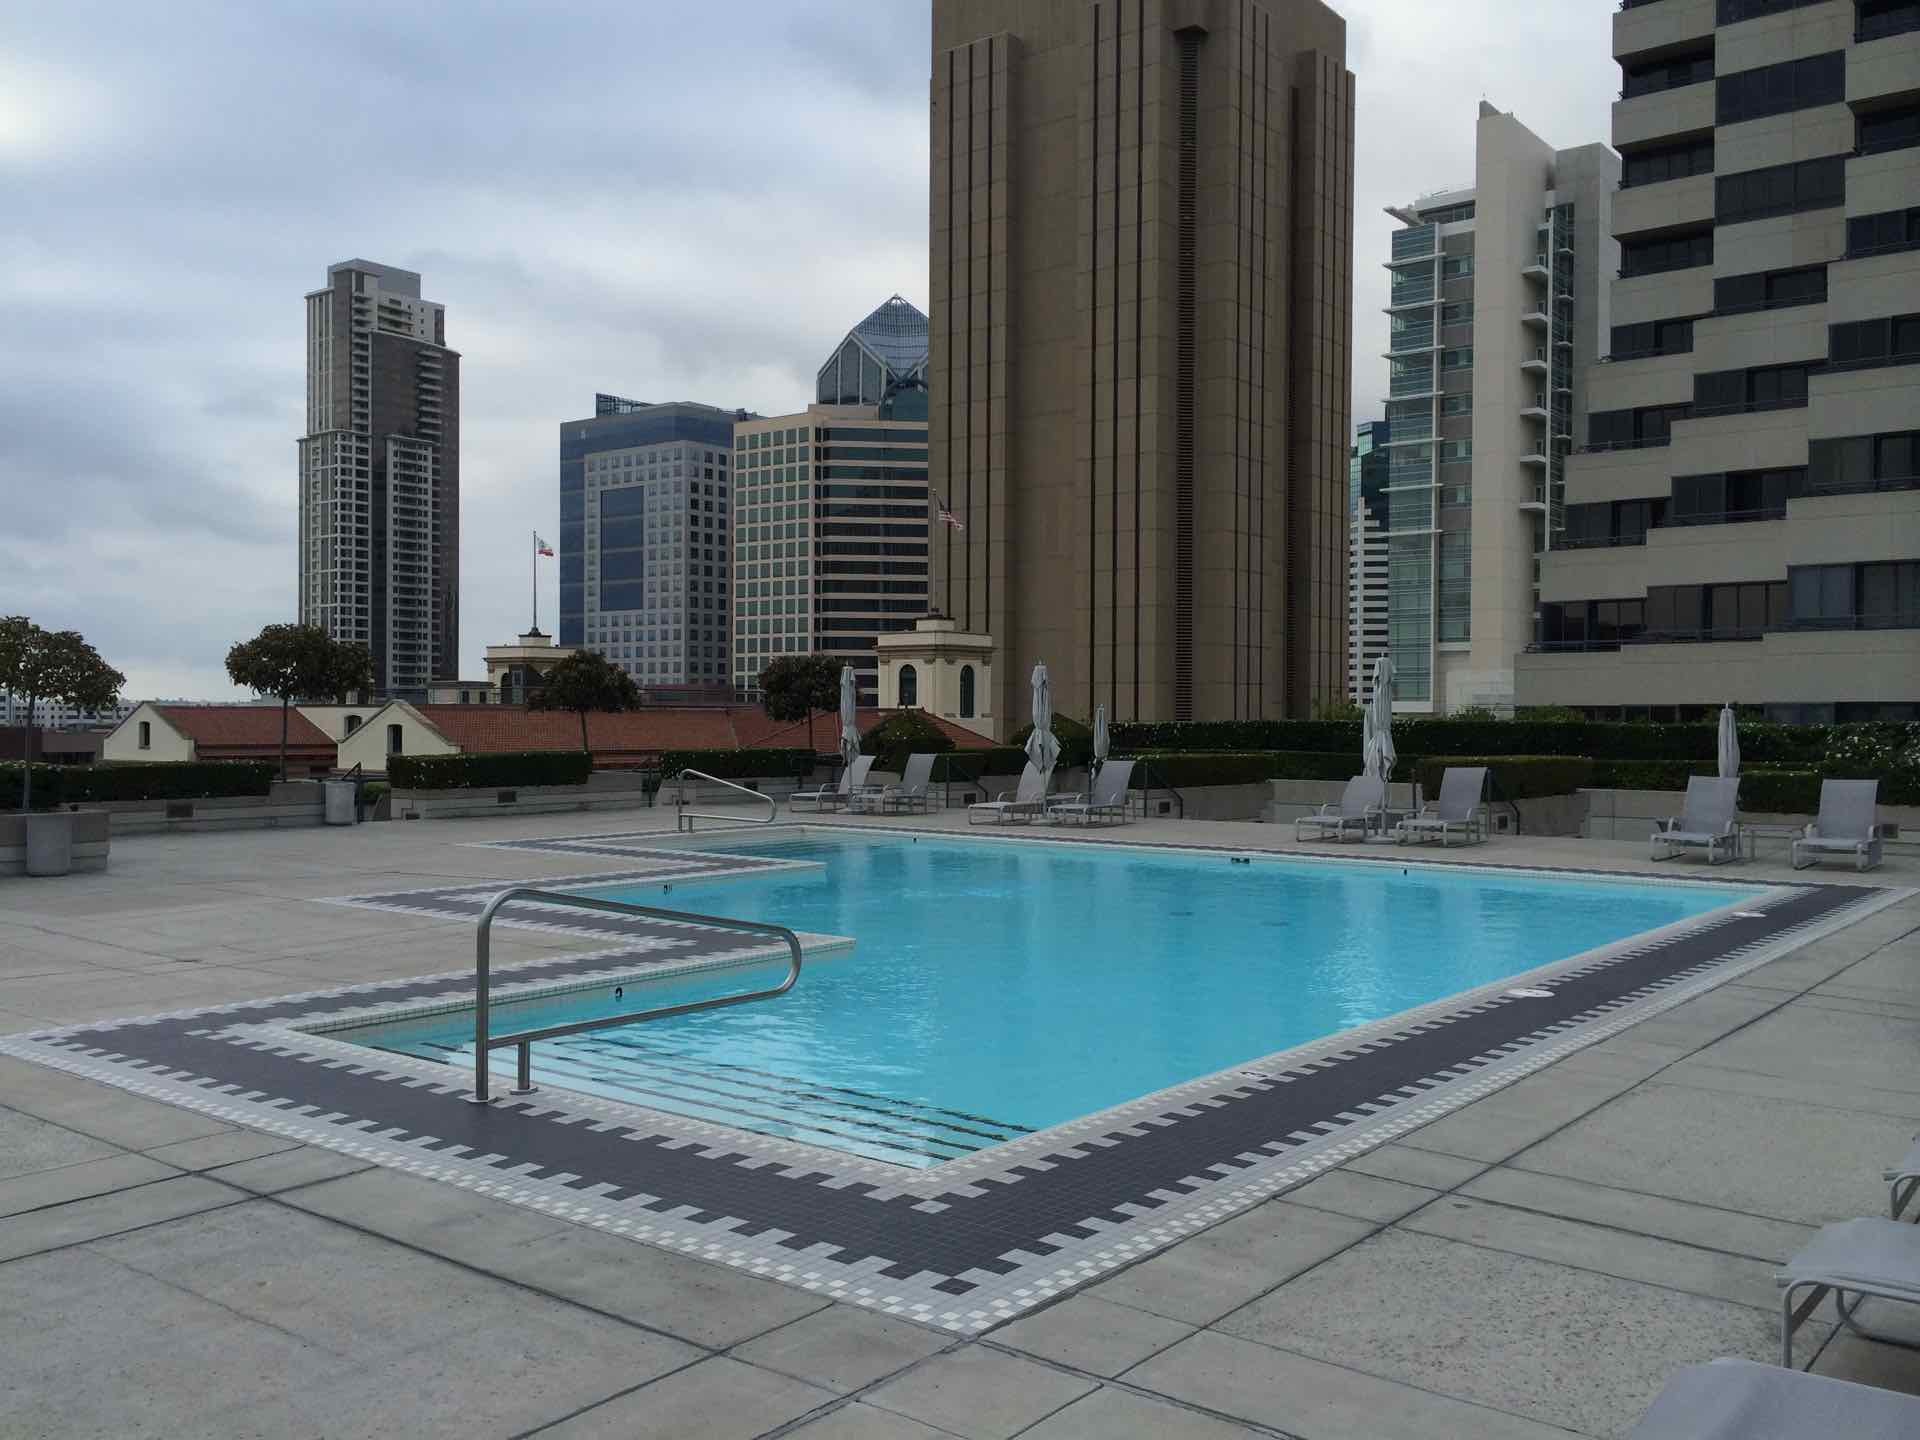 Pool Deck at Meridian condominium building in San Diego